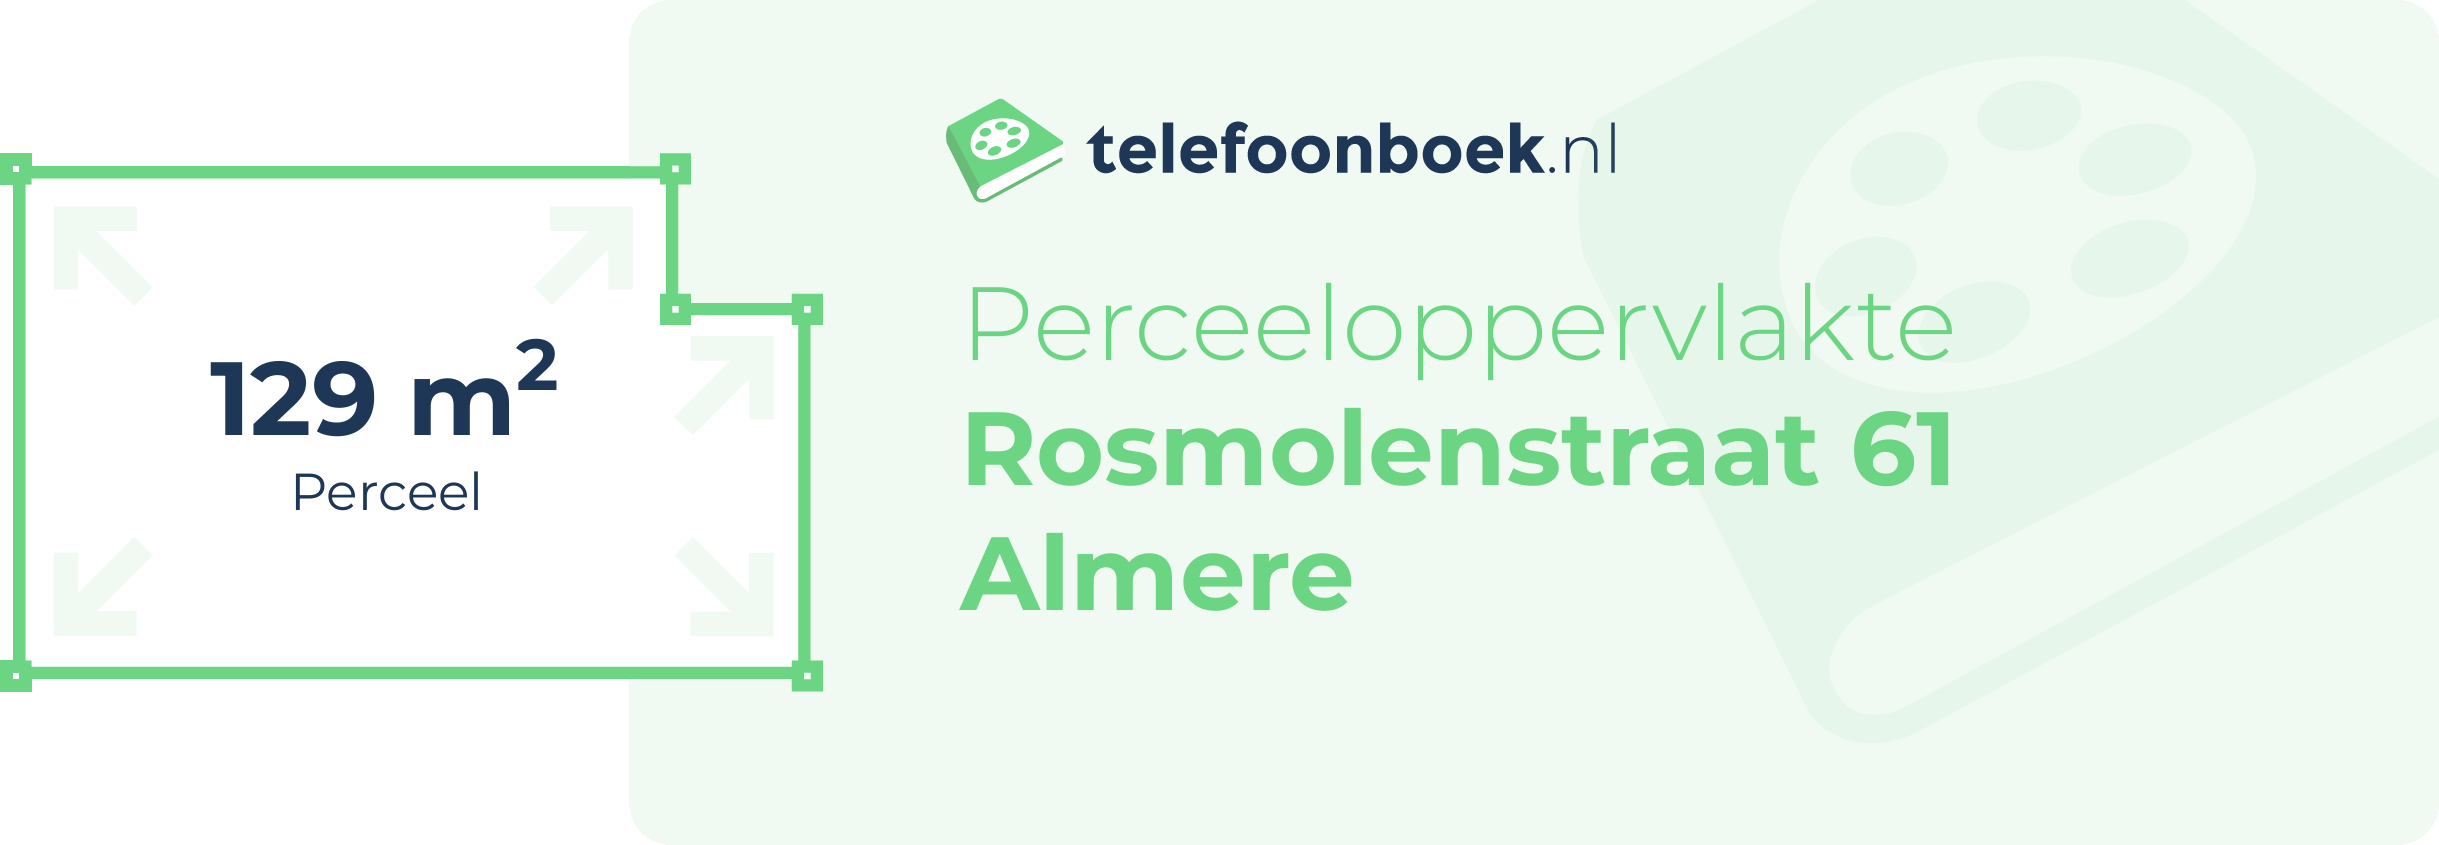 Perceeloppervlakte Rosmolenstraat 61 Almere